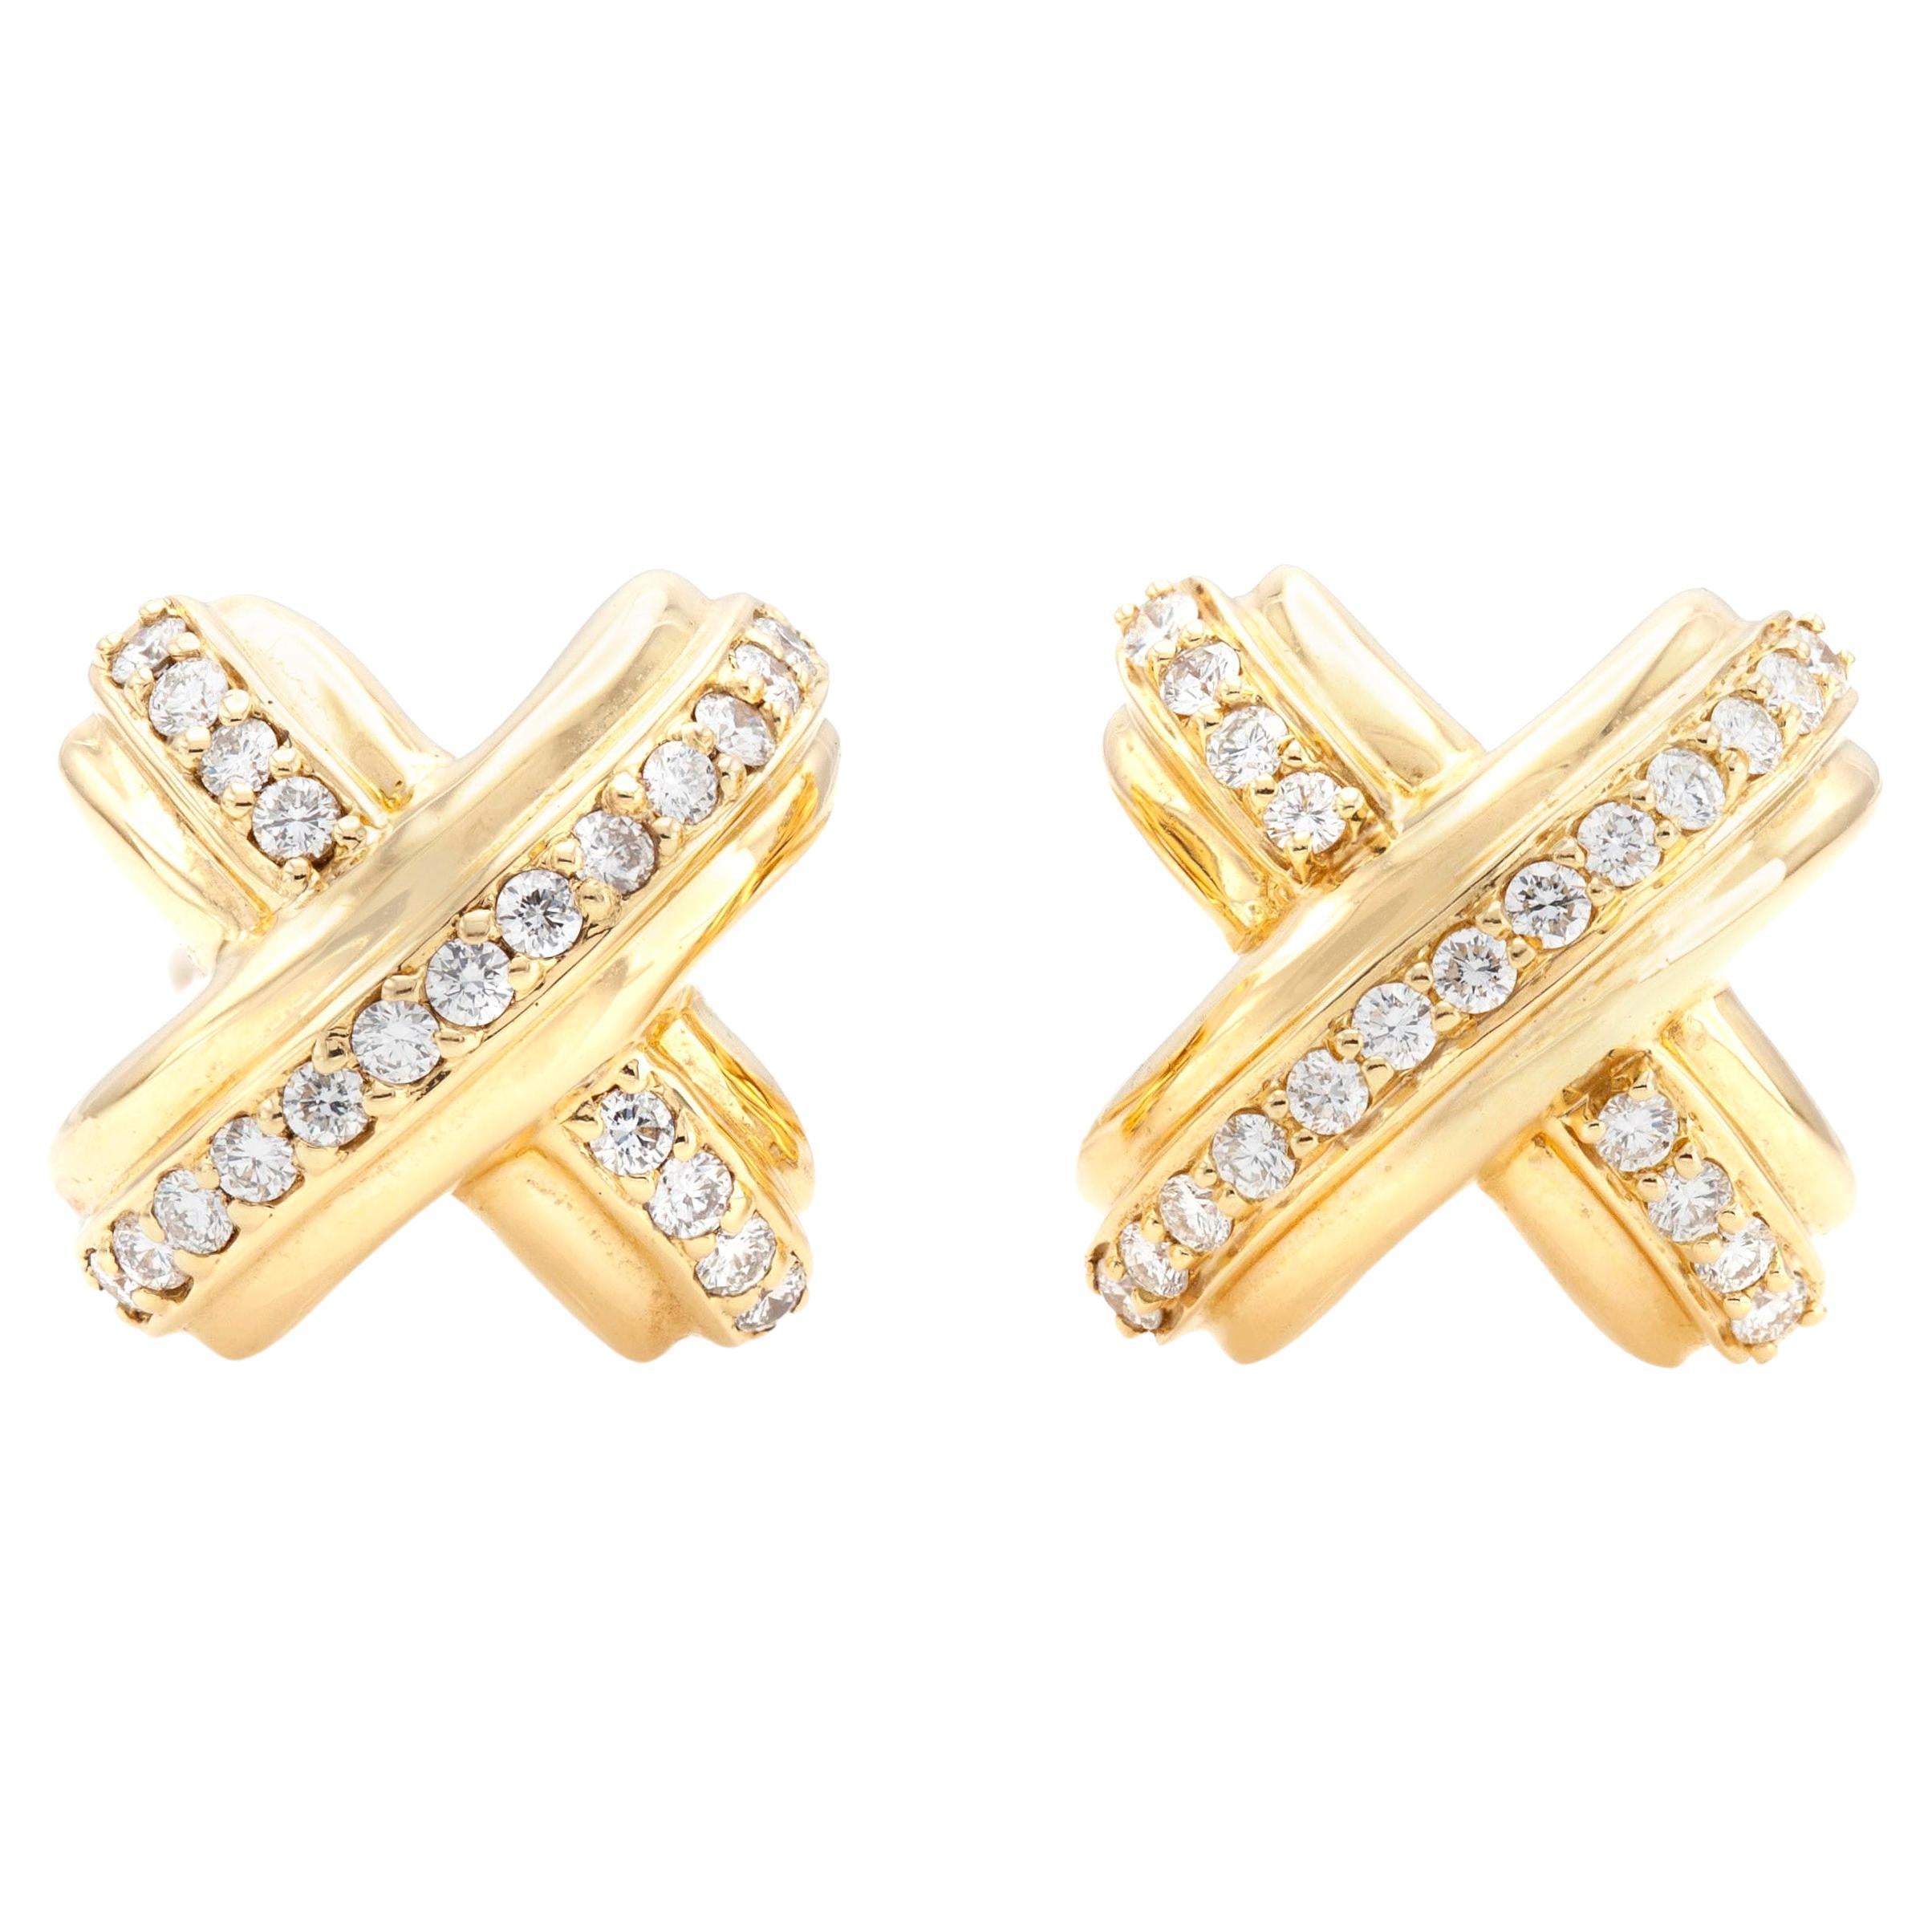 Tiffany & Co. X Gold and Diamond Cufflinks